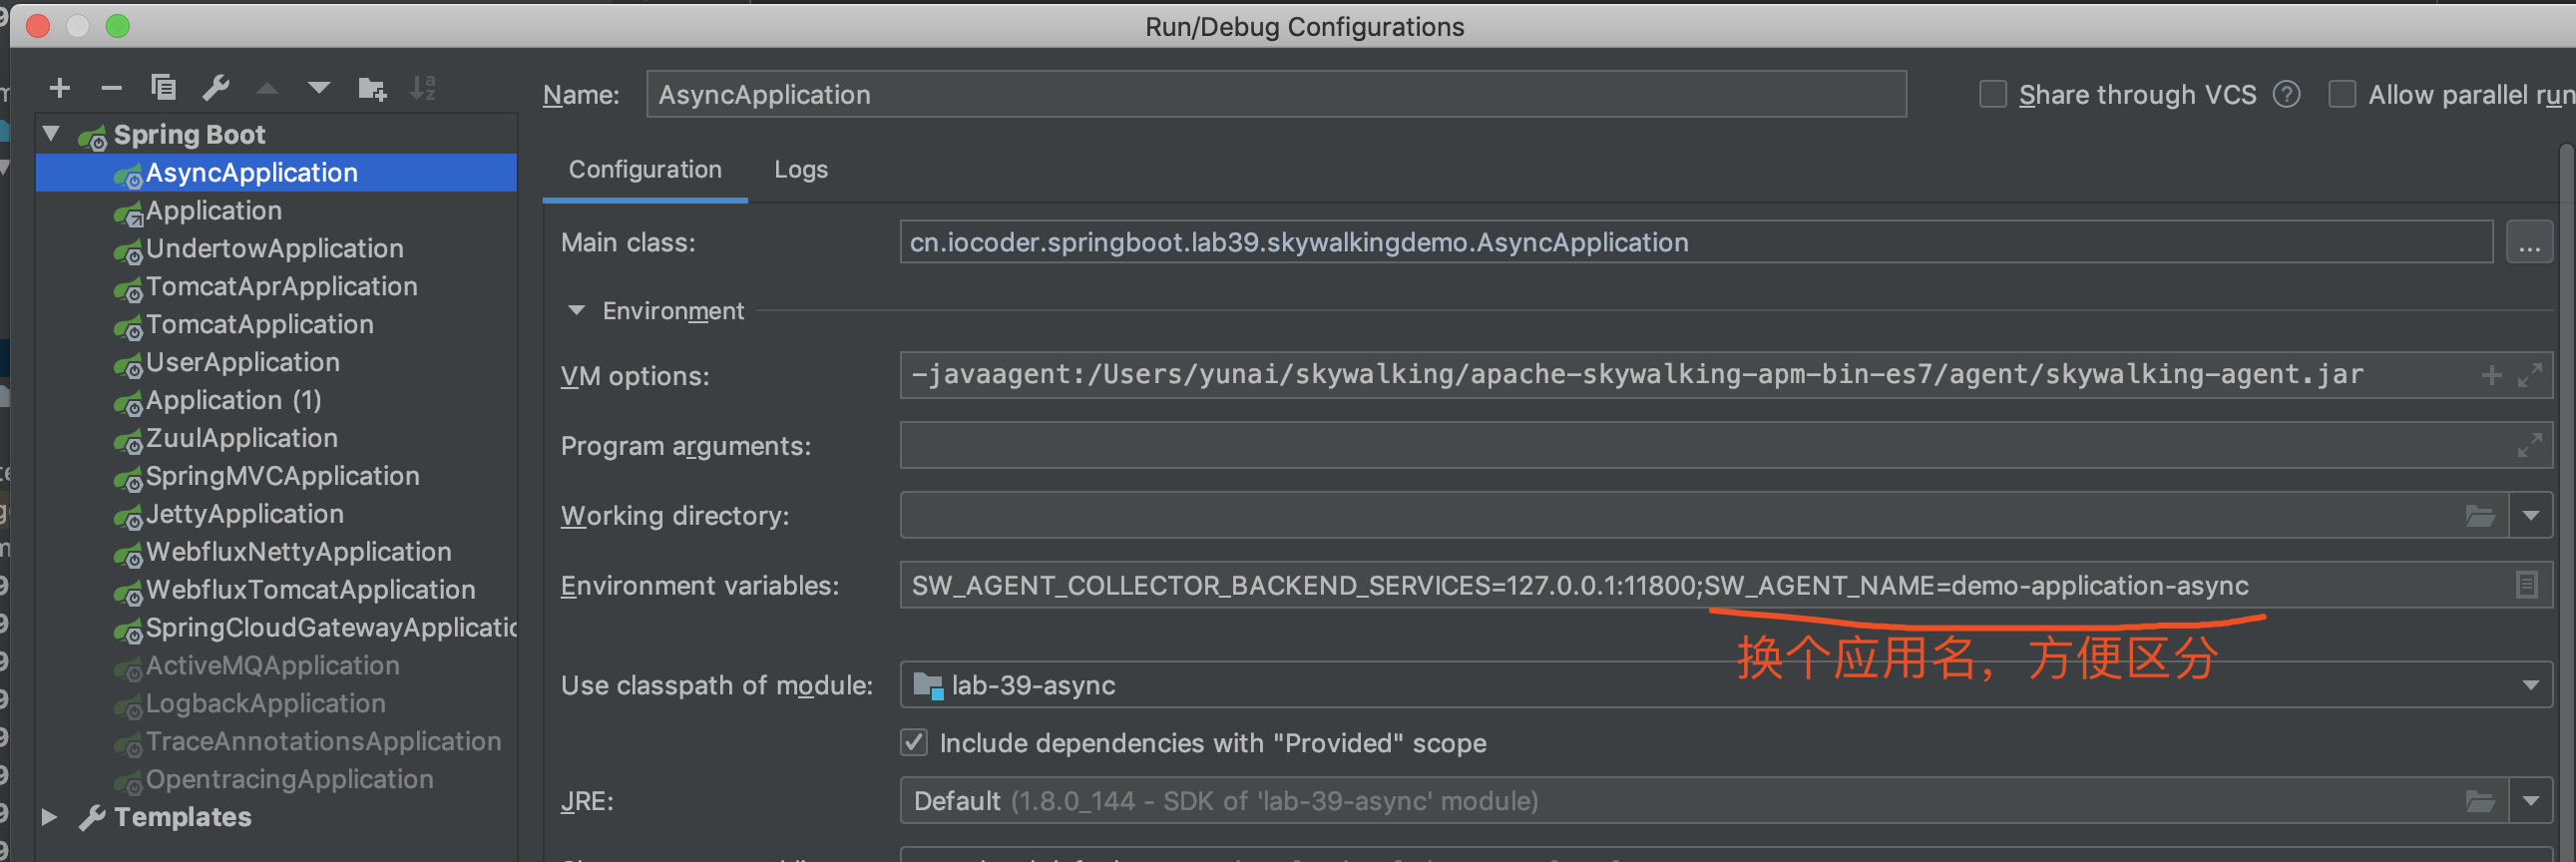 Run/Debug Configurations